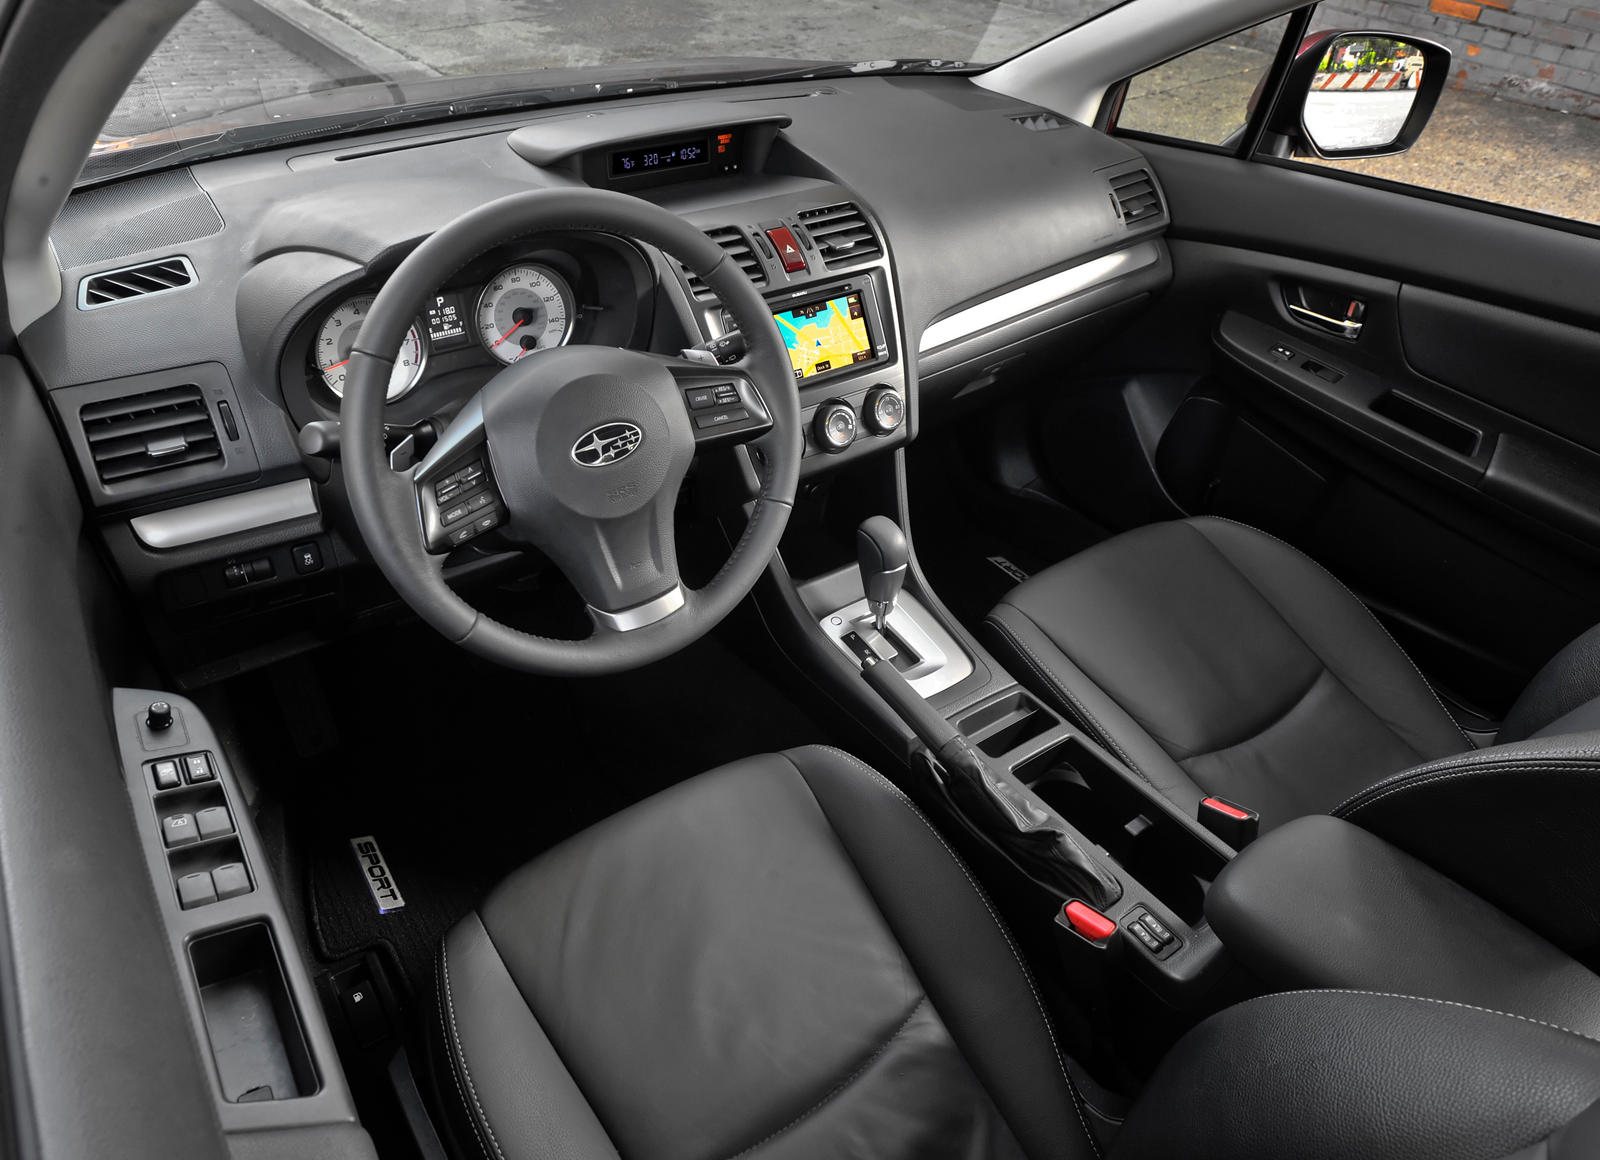 2013 Subaru Impreza Hatchback Interior Photos | CarBuzz